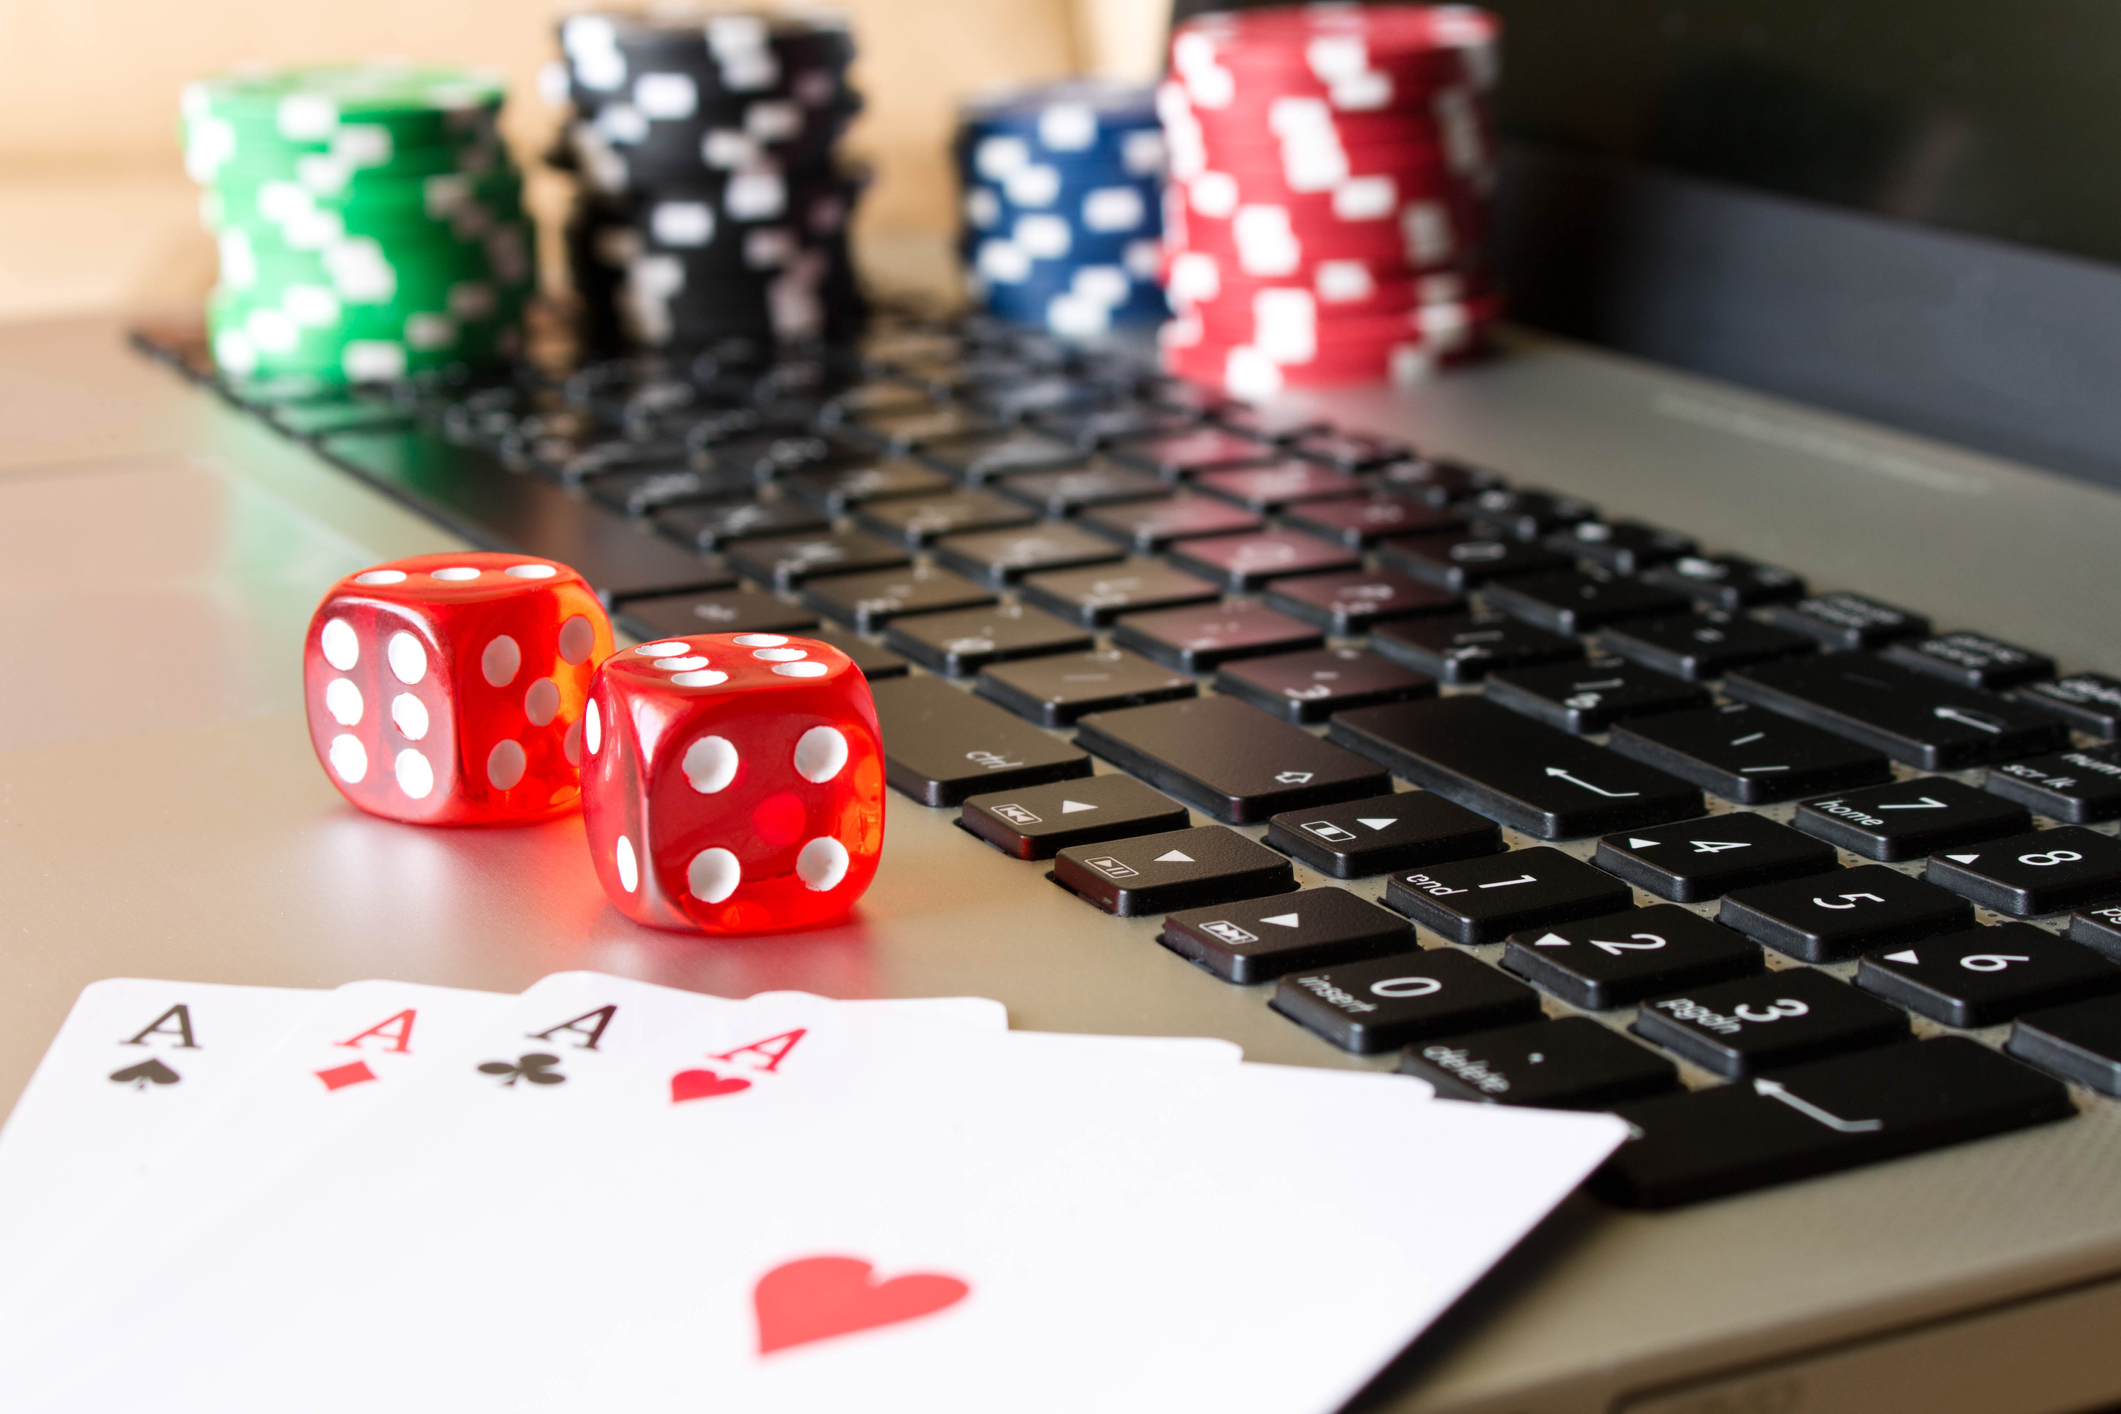 Online Poker Casino